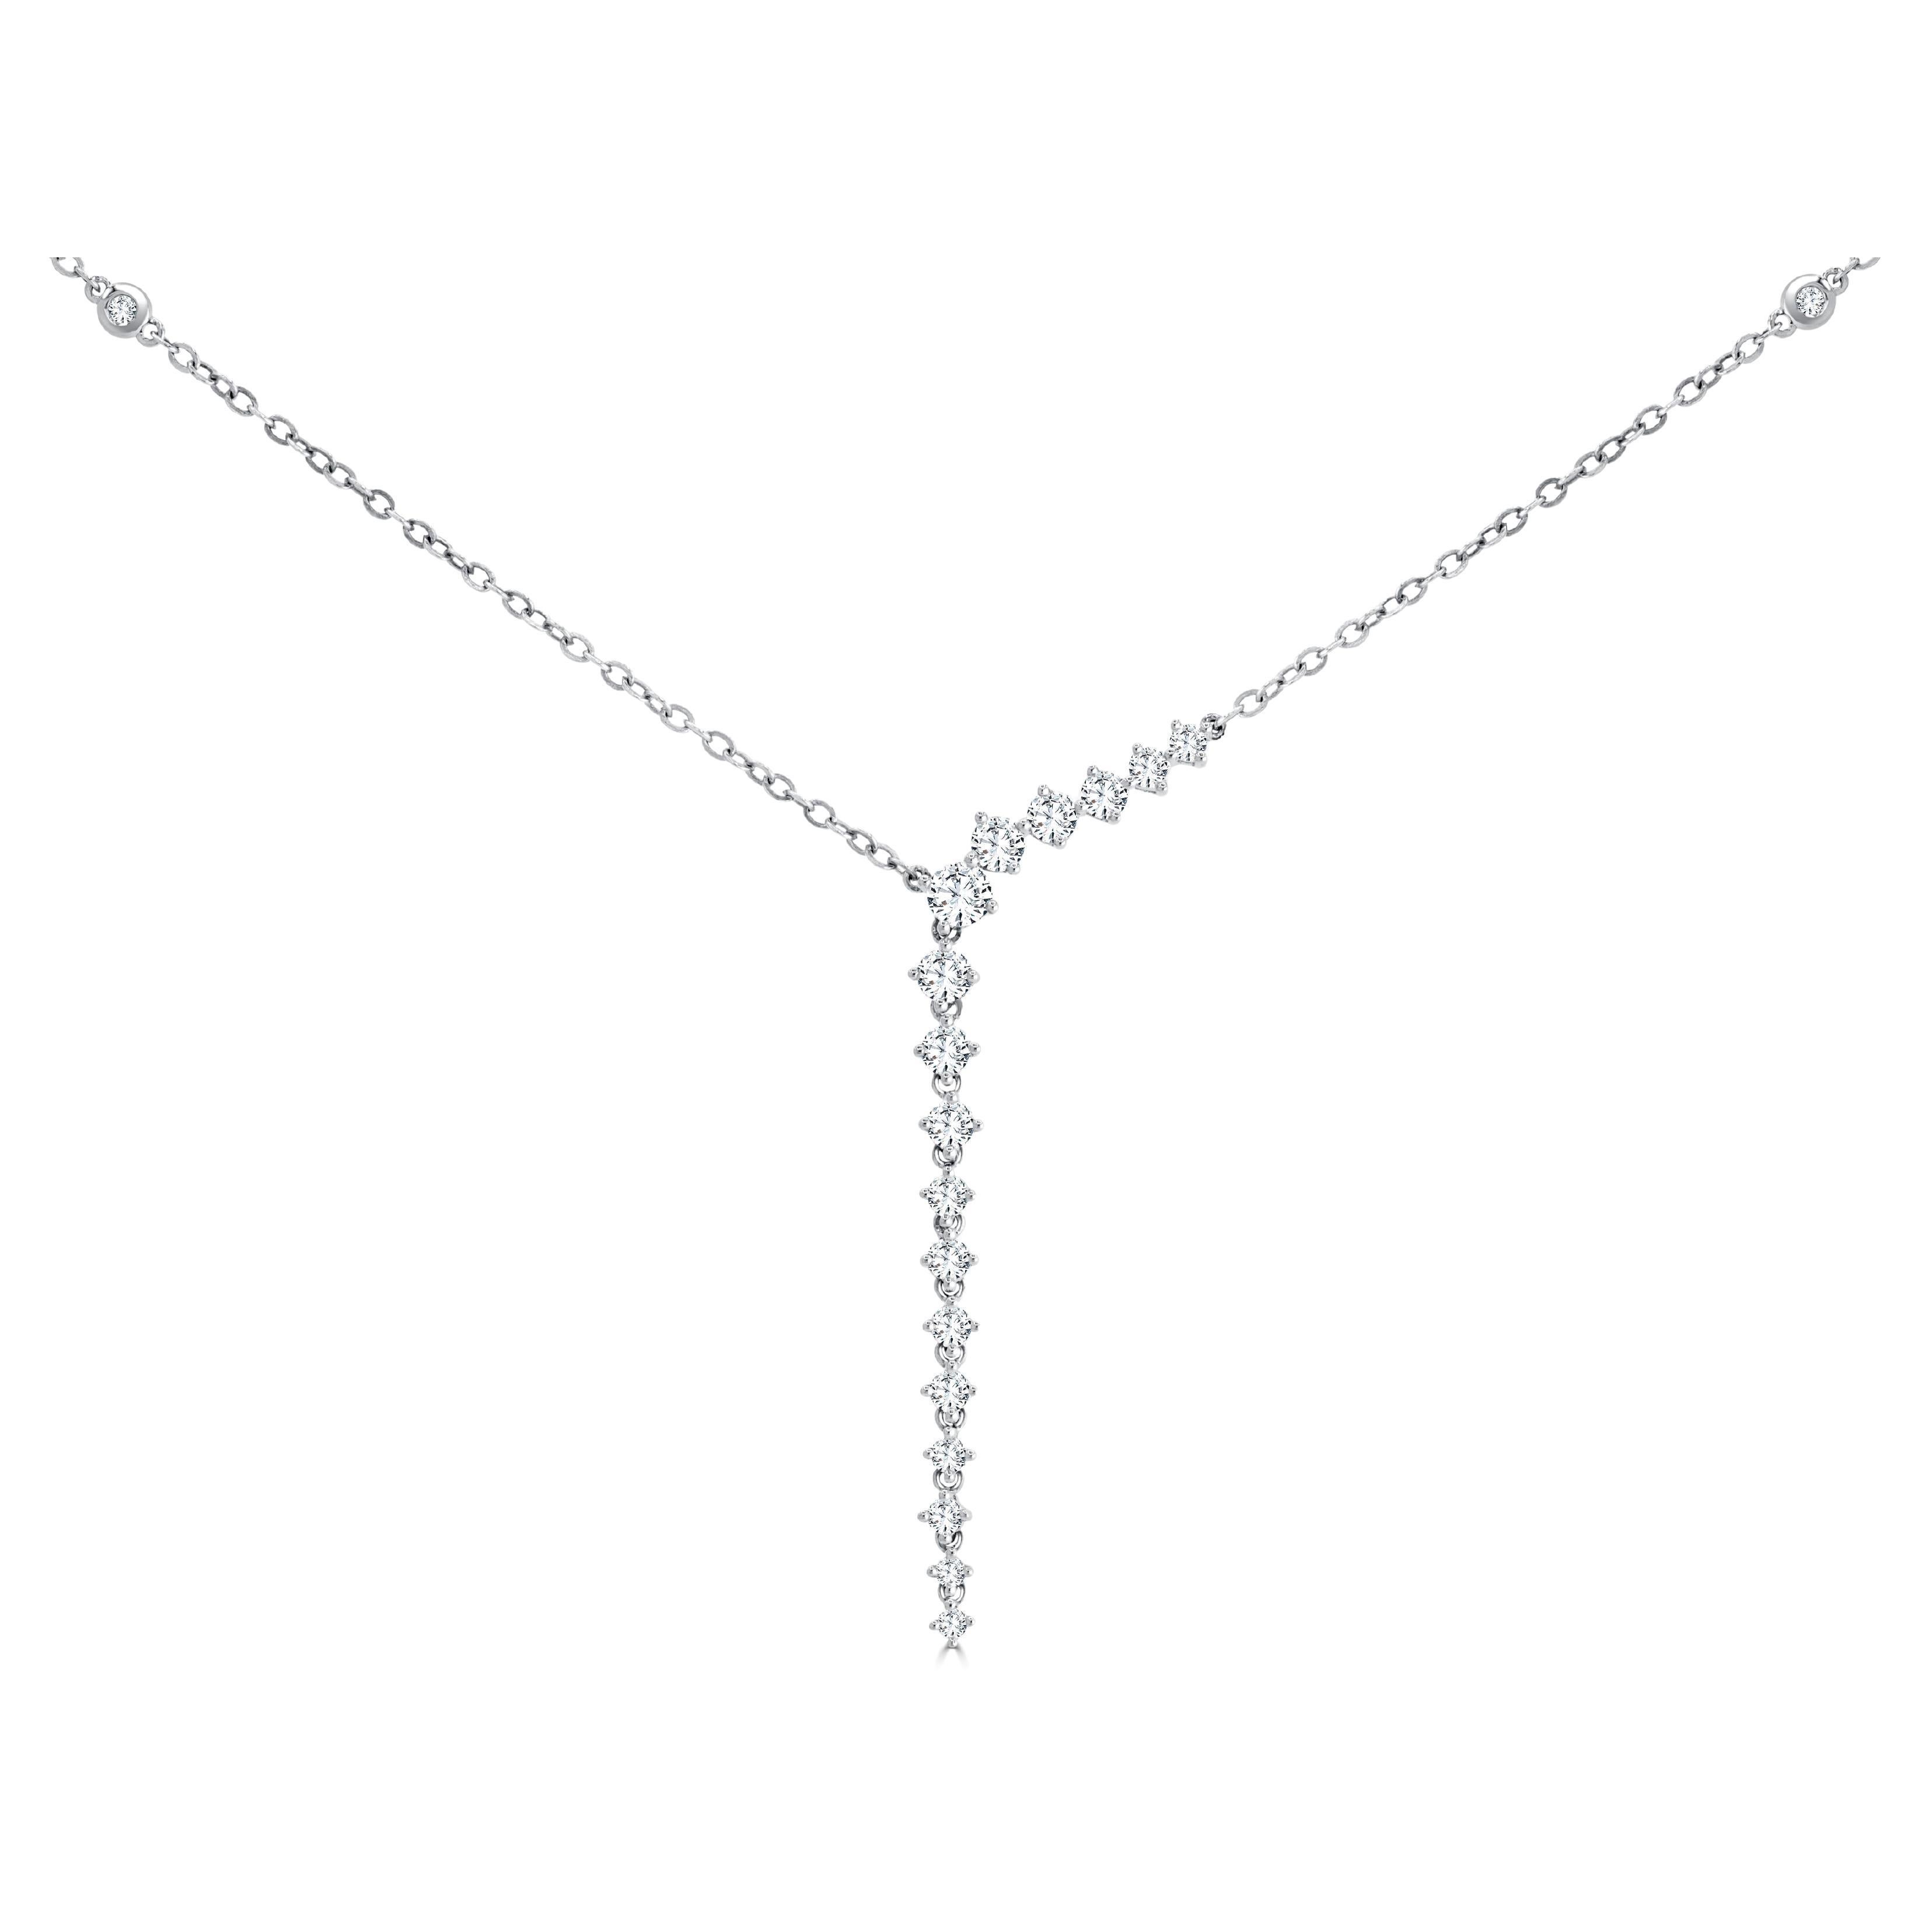 1.25 Carat Graduated Round Diamonds Dangle Drop Necklace in 14k White Gold